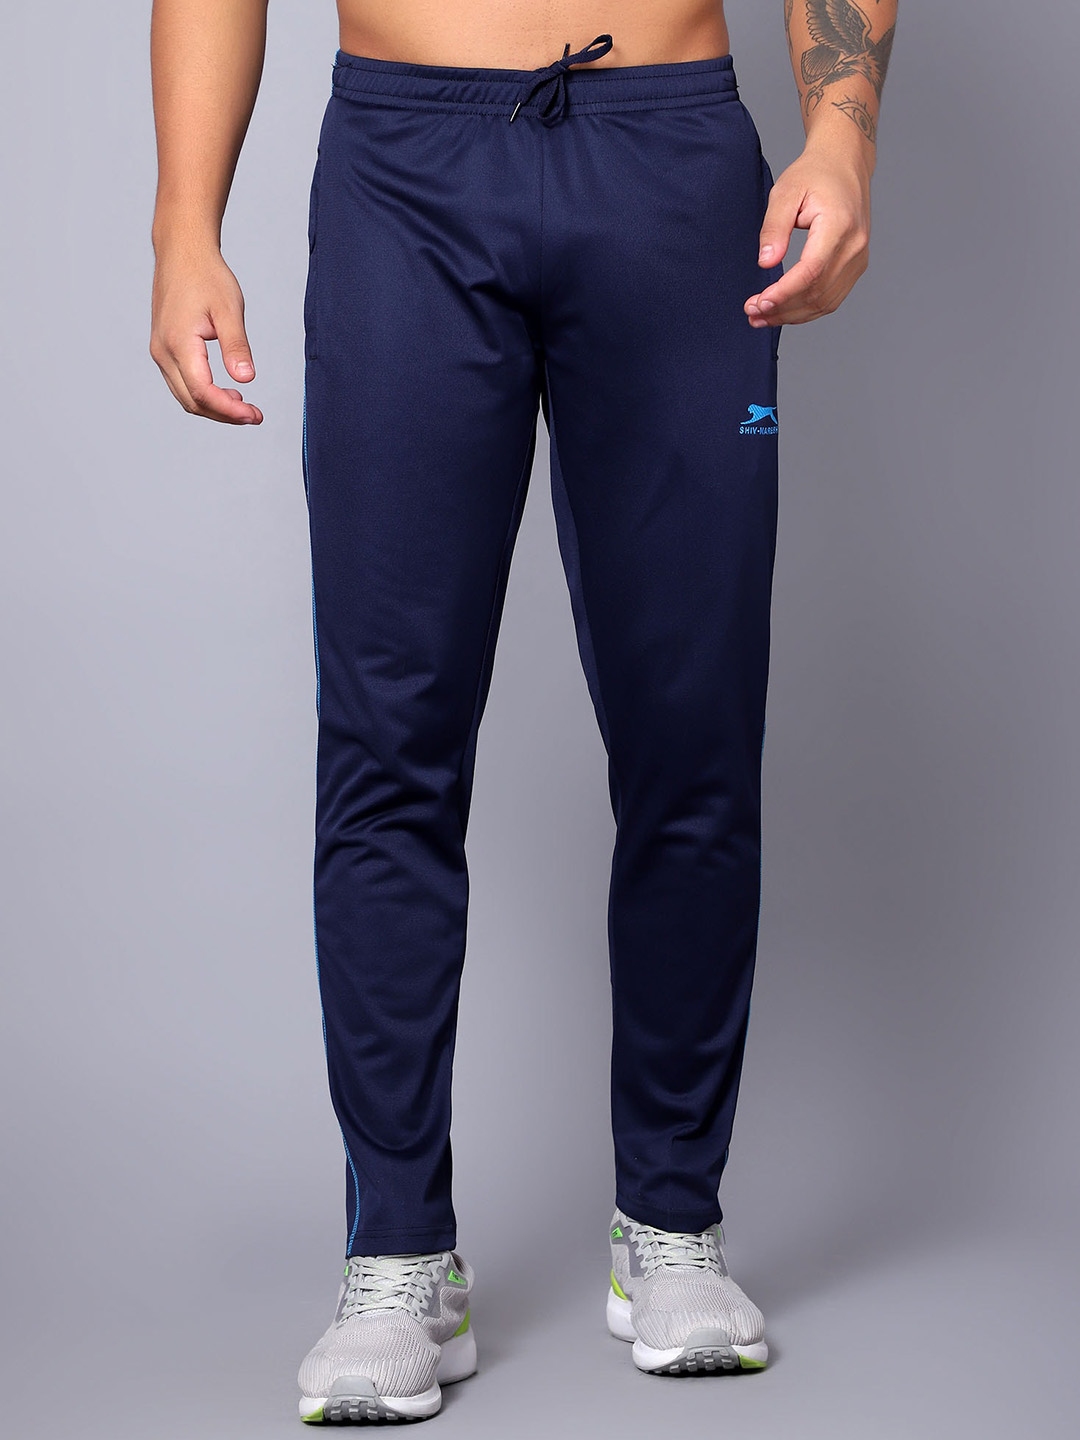 Fila Sport Solid Blue Active Pants Size M - 68% off